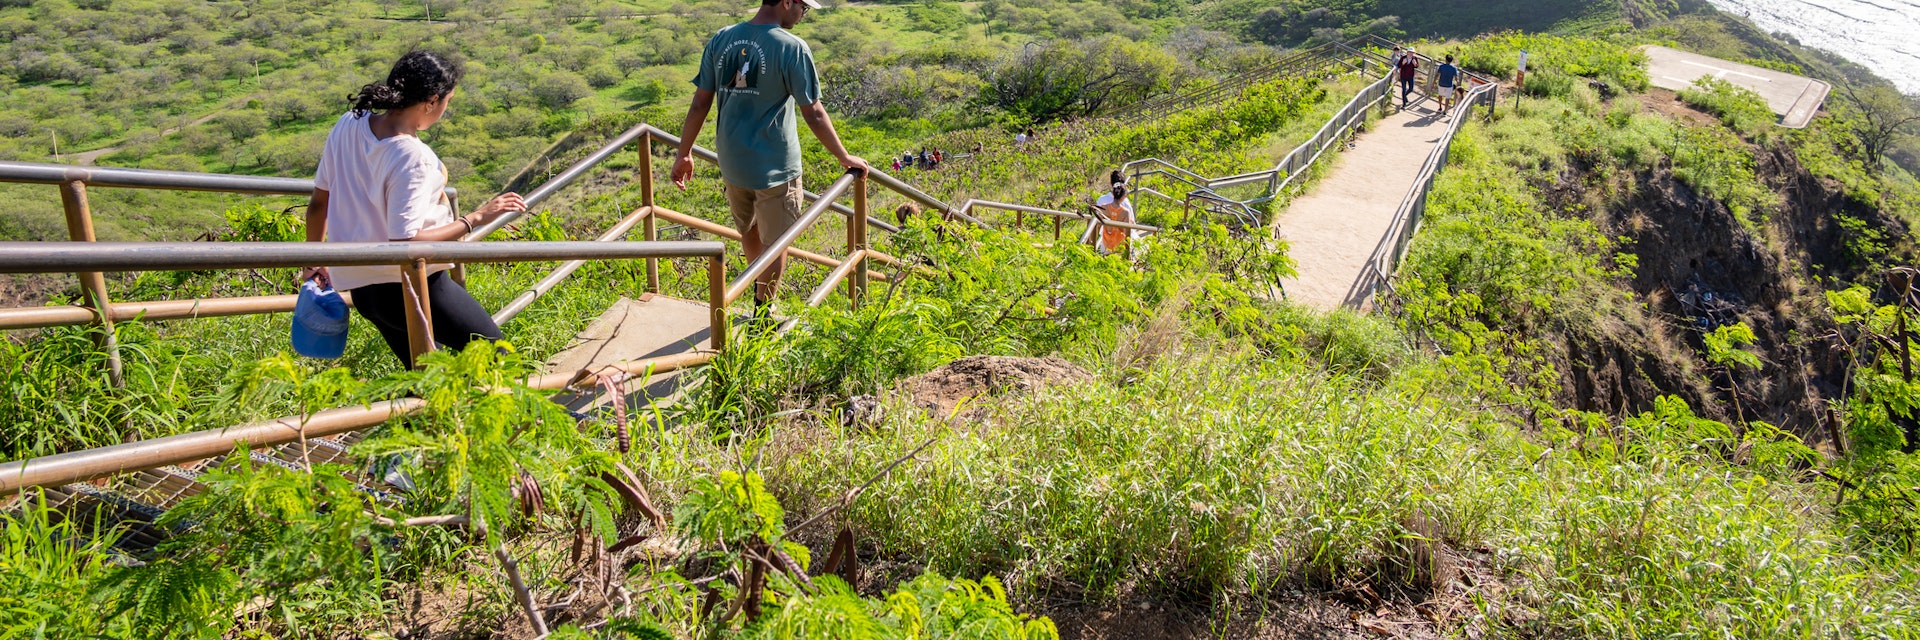 Honolulu, Hawaii - December 27, 2022:  Tourists hiking on the Diamond Head lookout trail.
1458042645
coast, diamond, hawaiian, hike, lookout, ocean, park, scenic, view, hawaii, landscape, outdoor, vacation